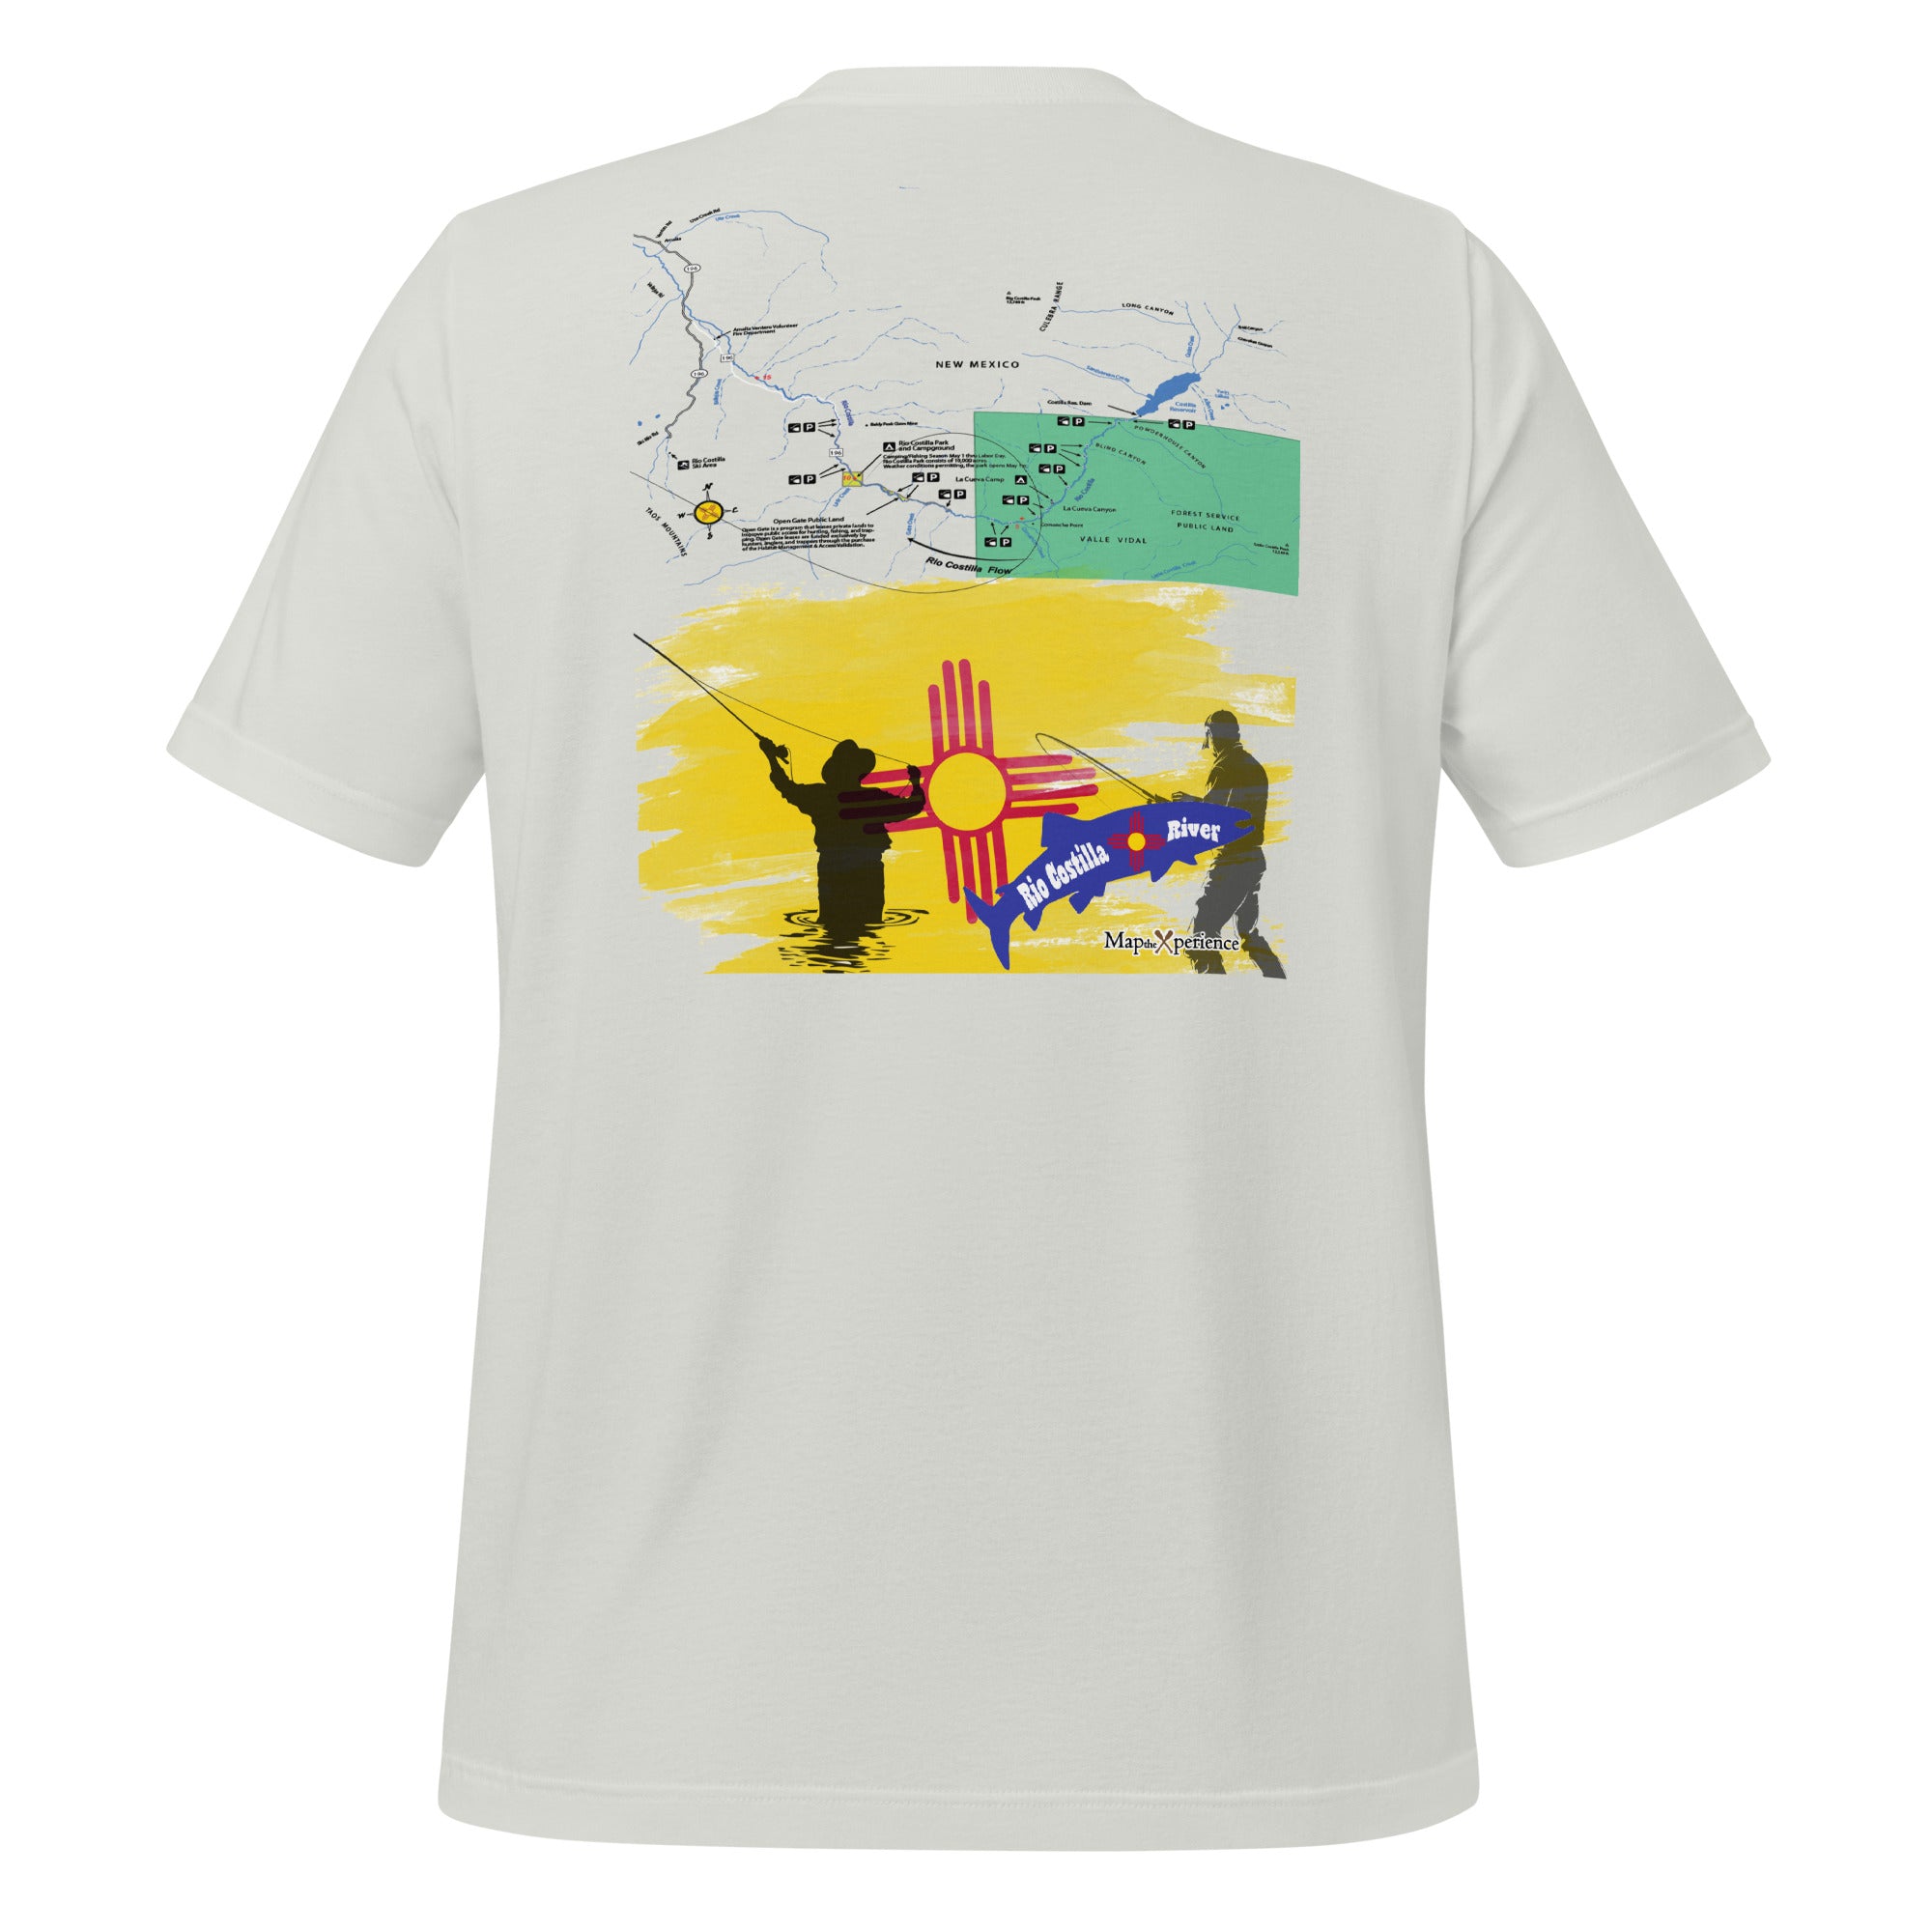 Rio Costilla River, New Mexico Performance t-shirt